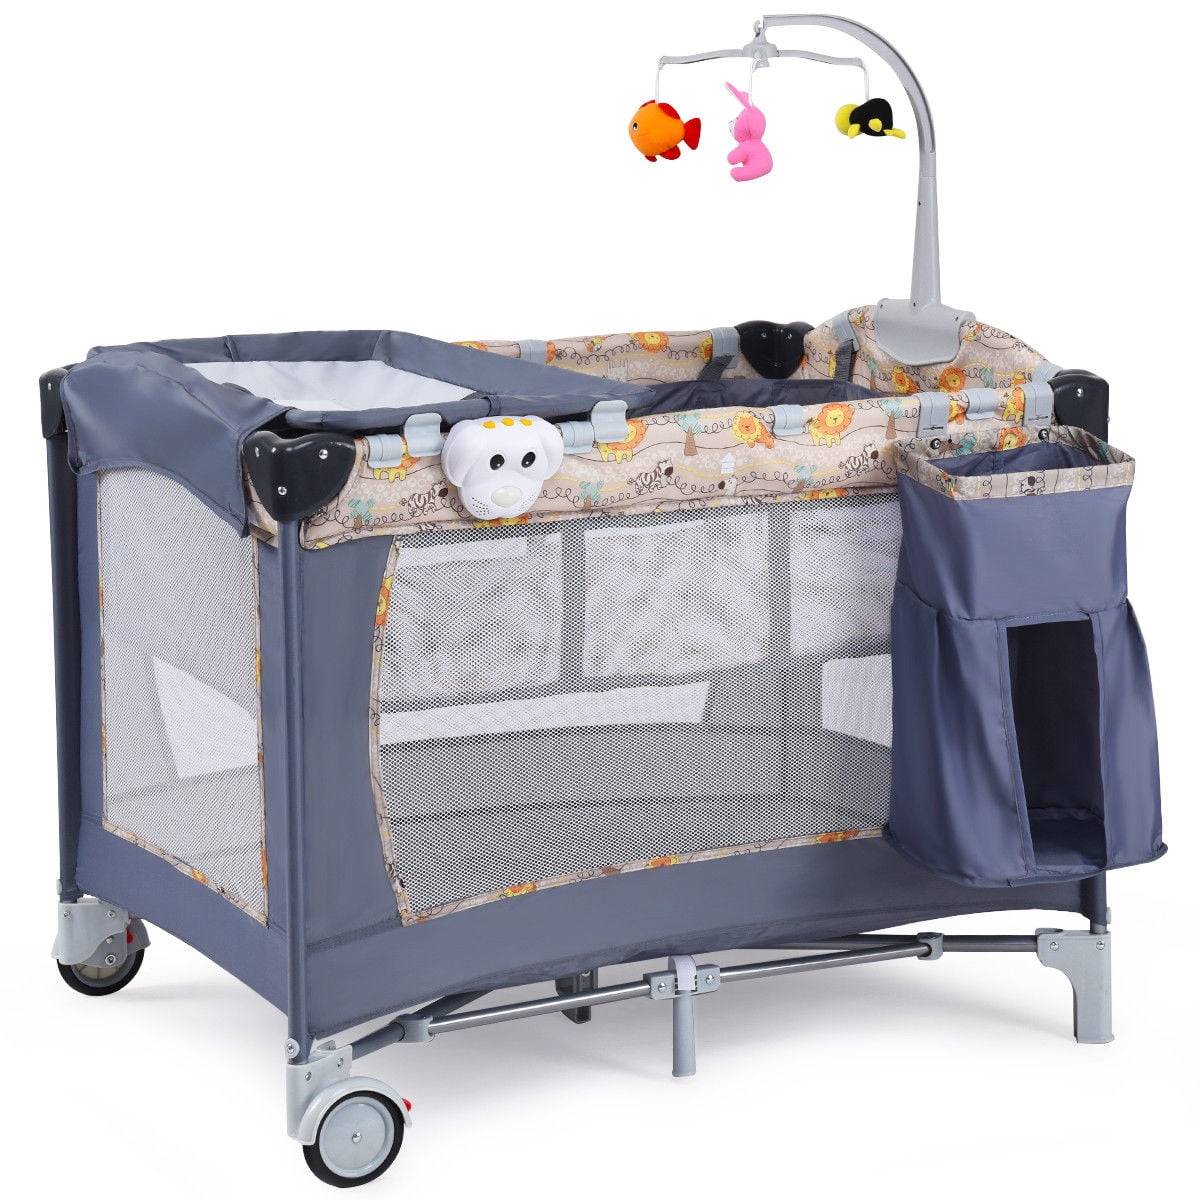 Baby Folding Oxford Cot Bed Travel Playpen Hammock Holder Crib Portable HE